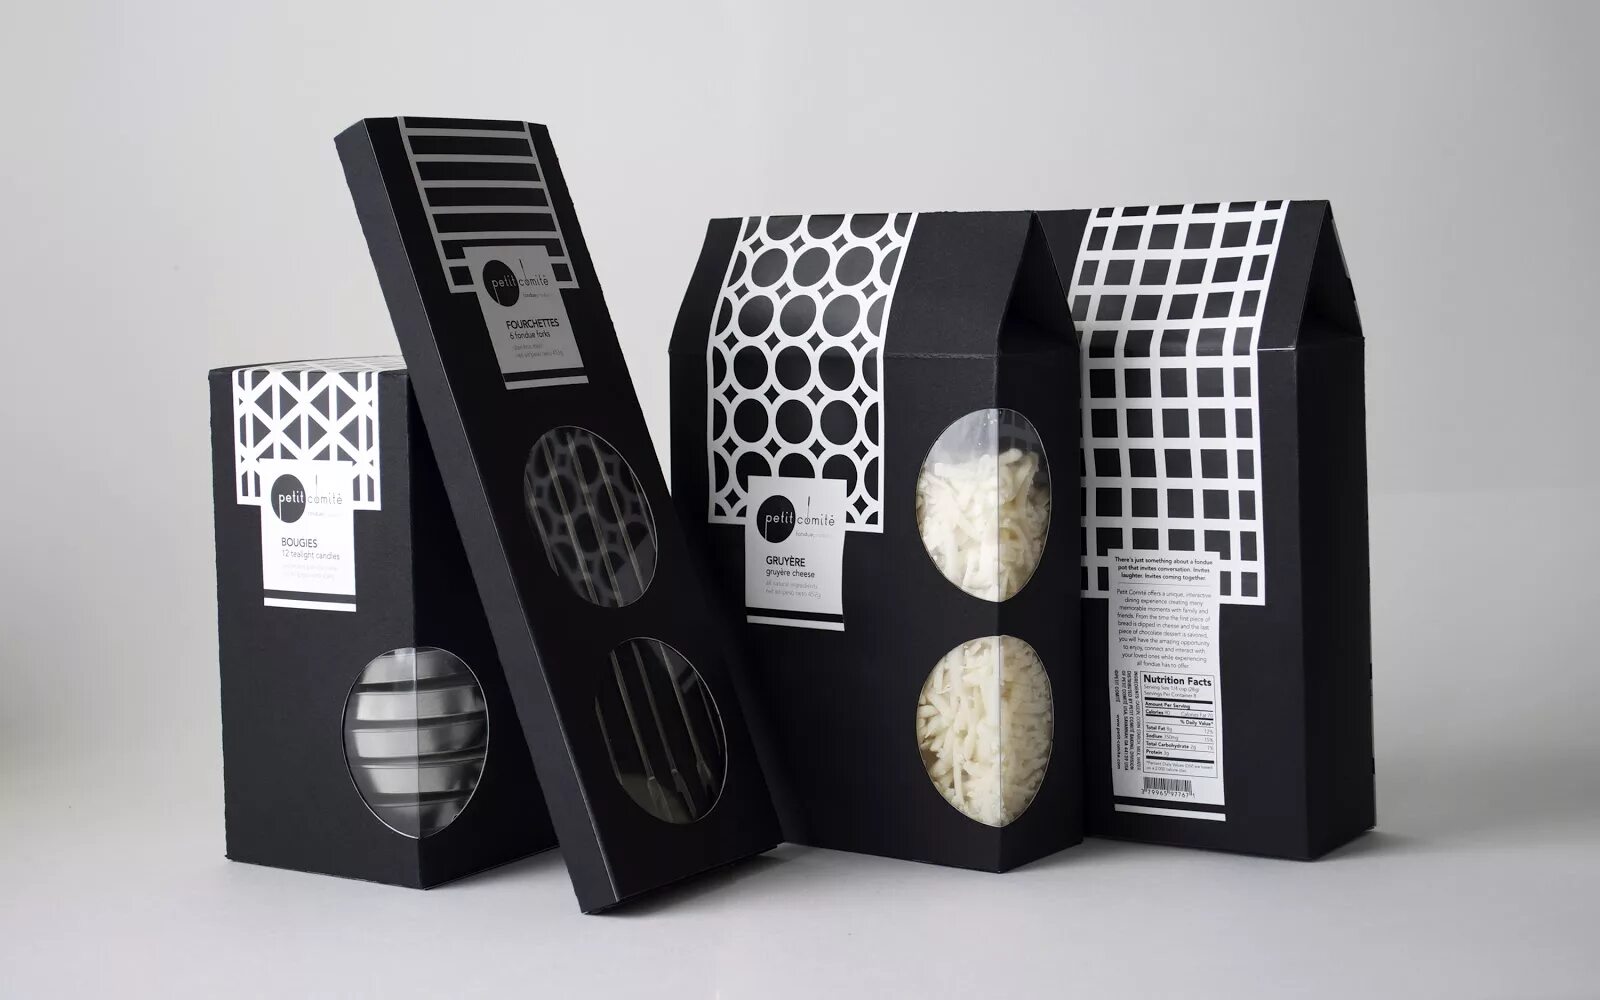 Creative packing. Креативная упаковка. Креативная упаковка товара. Дизайнерская упаковка для еды. Стильная черная упаковка.